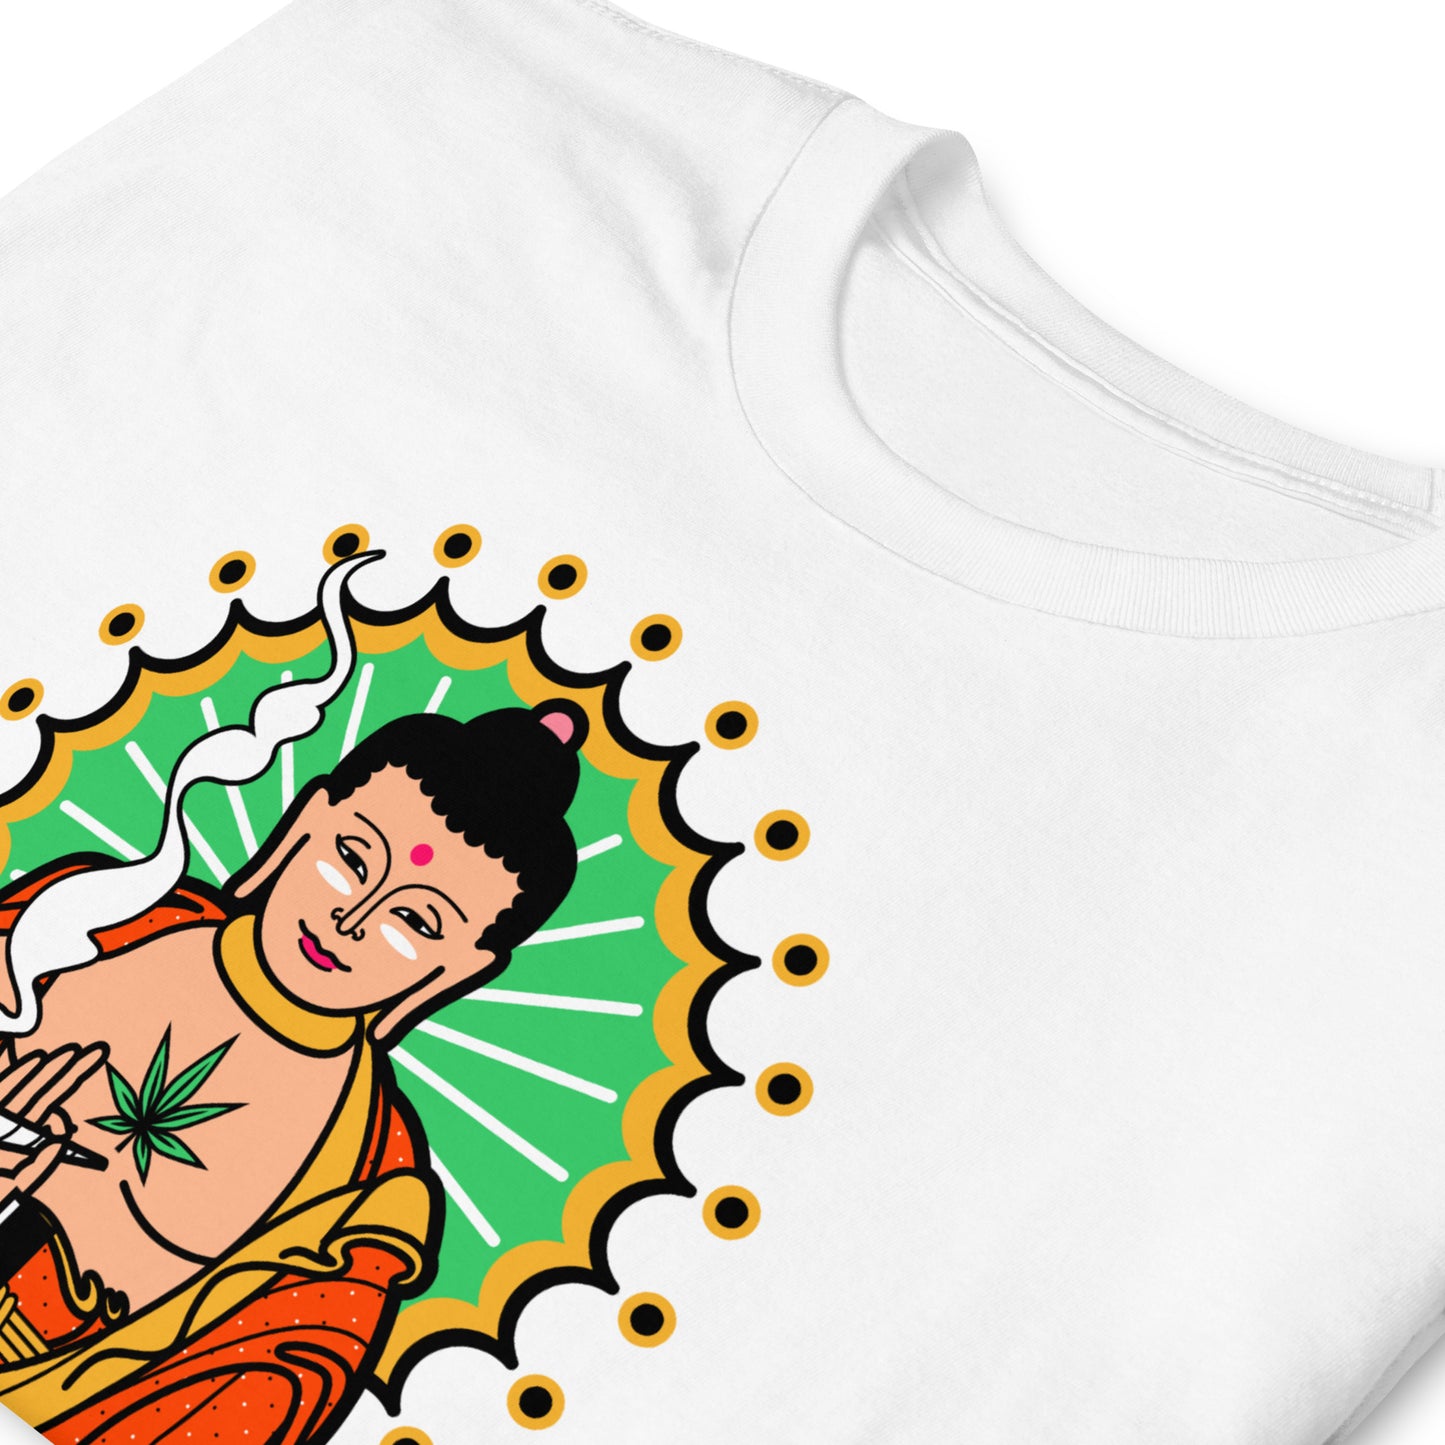 Smoking Buddha Pop Culture Unisex T-Shirt